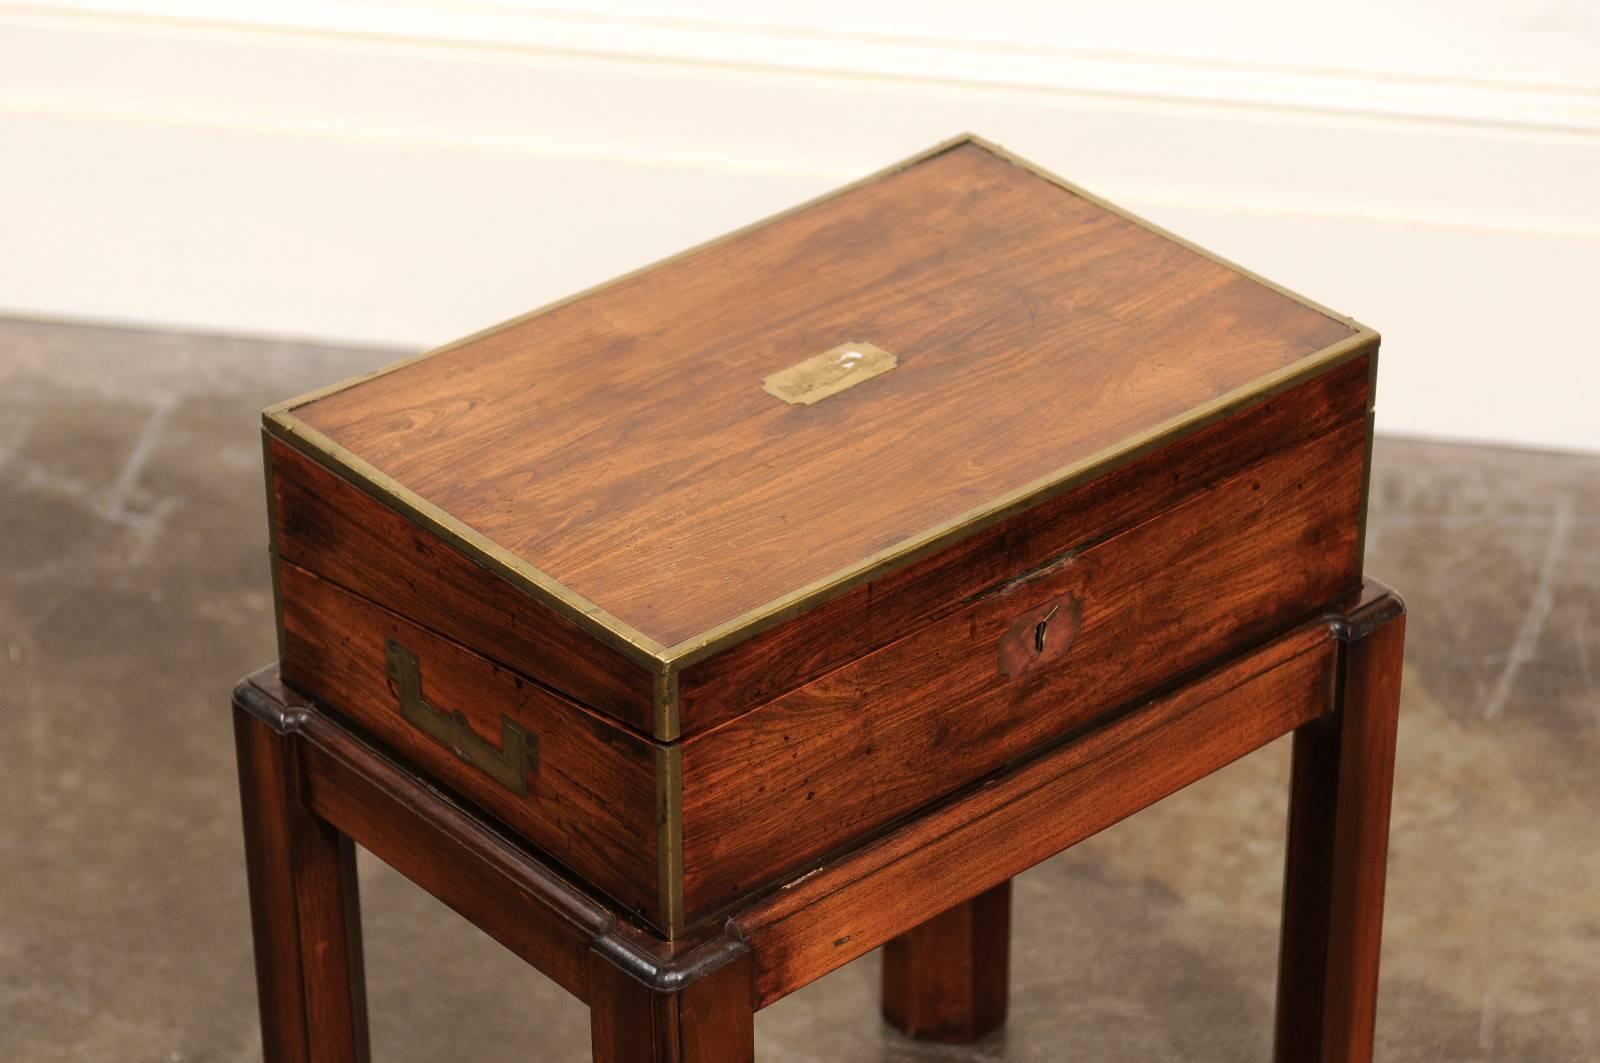 19th Century English Campaign Mahogany Lap Desk Decorative Box on Custom Stand, circa 1860